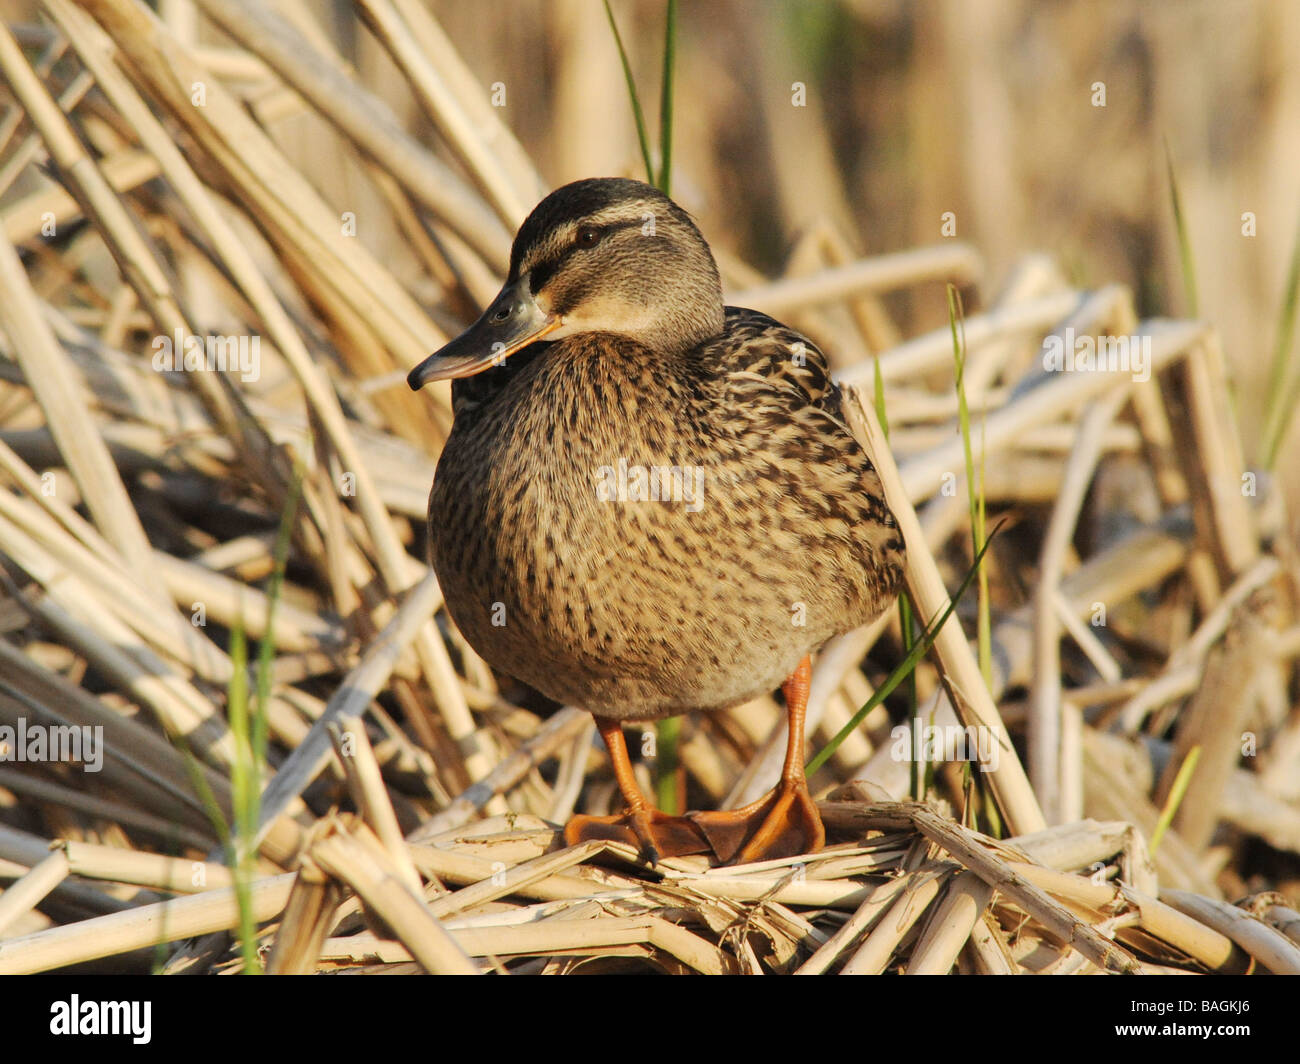 A female mallard duck nesting and sitting on straw. Stock Photo